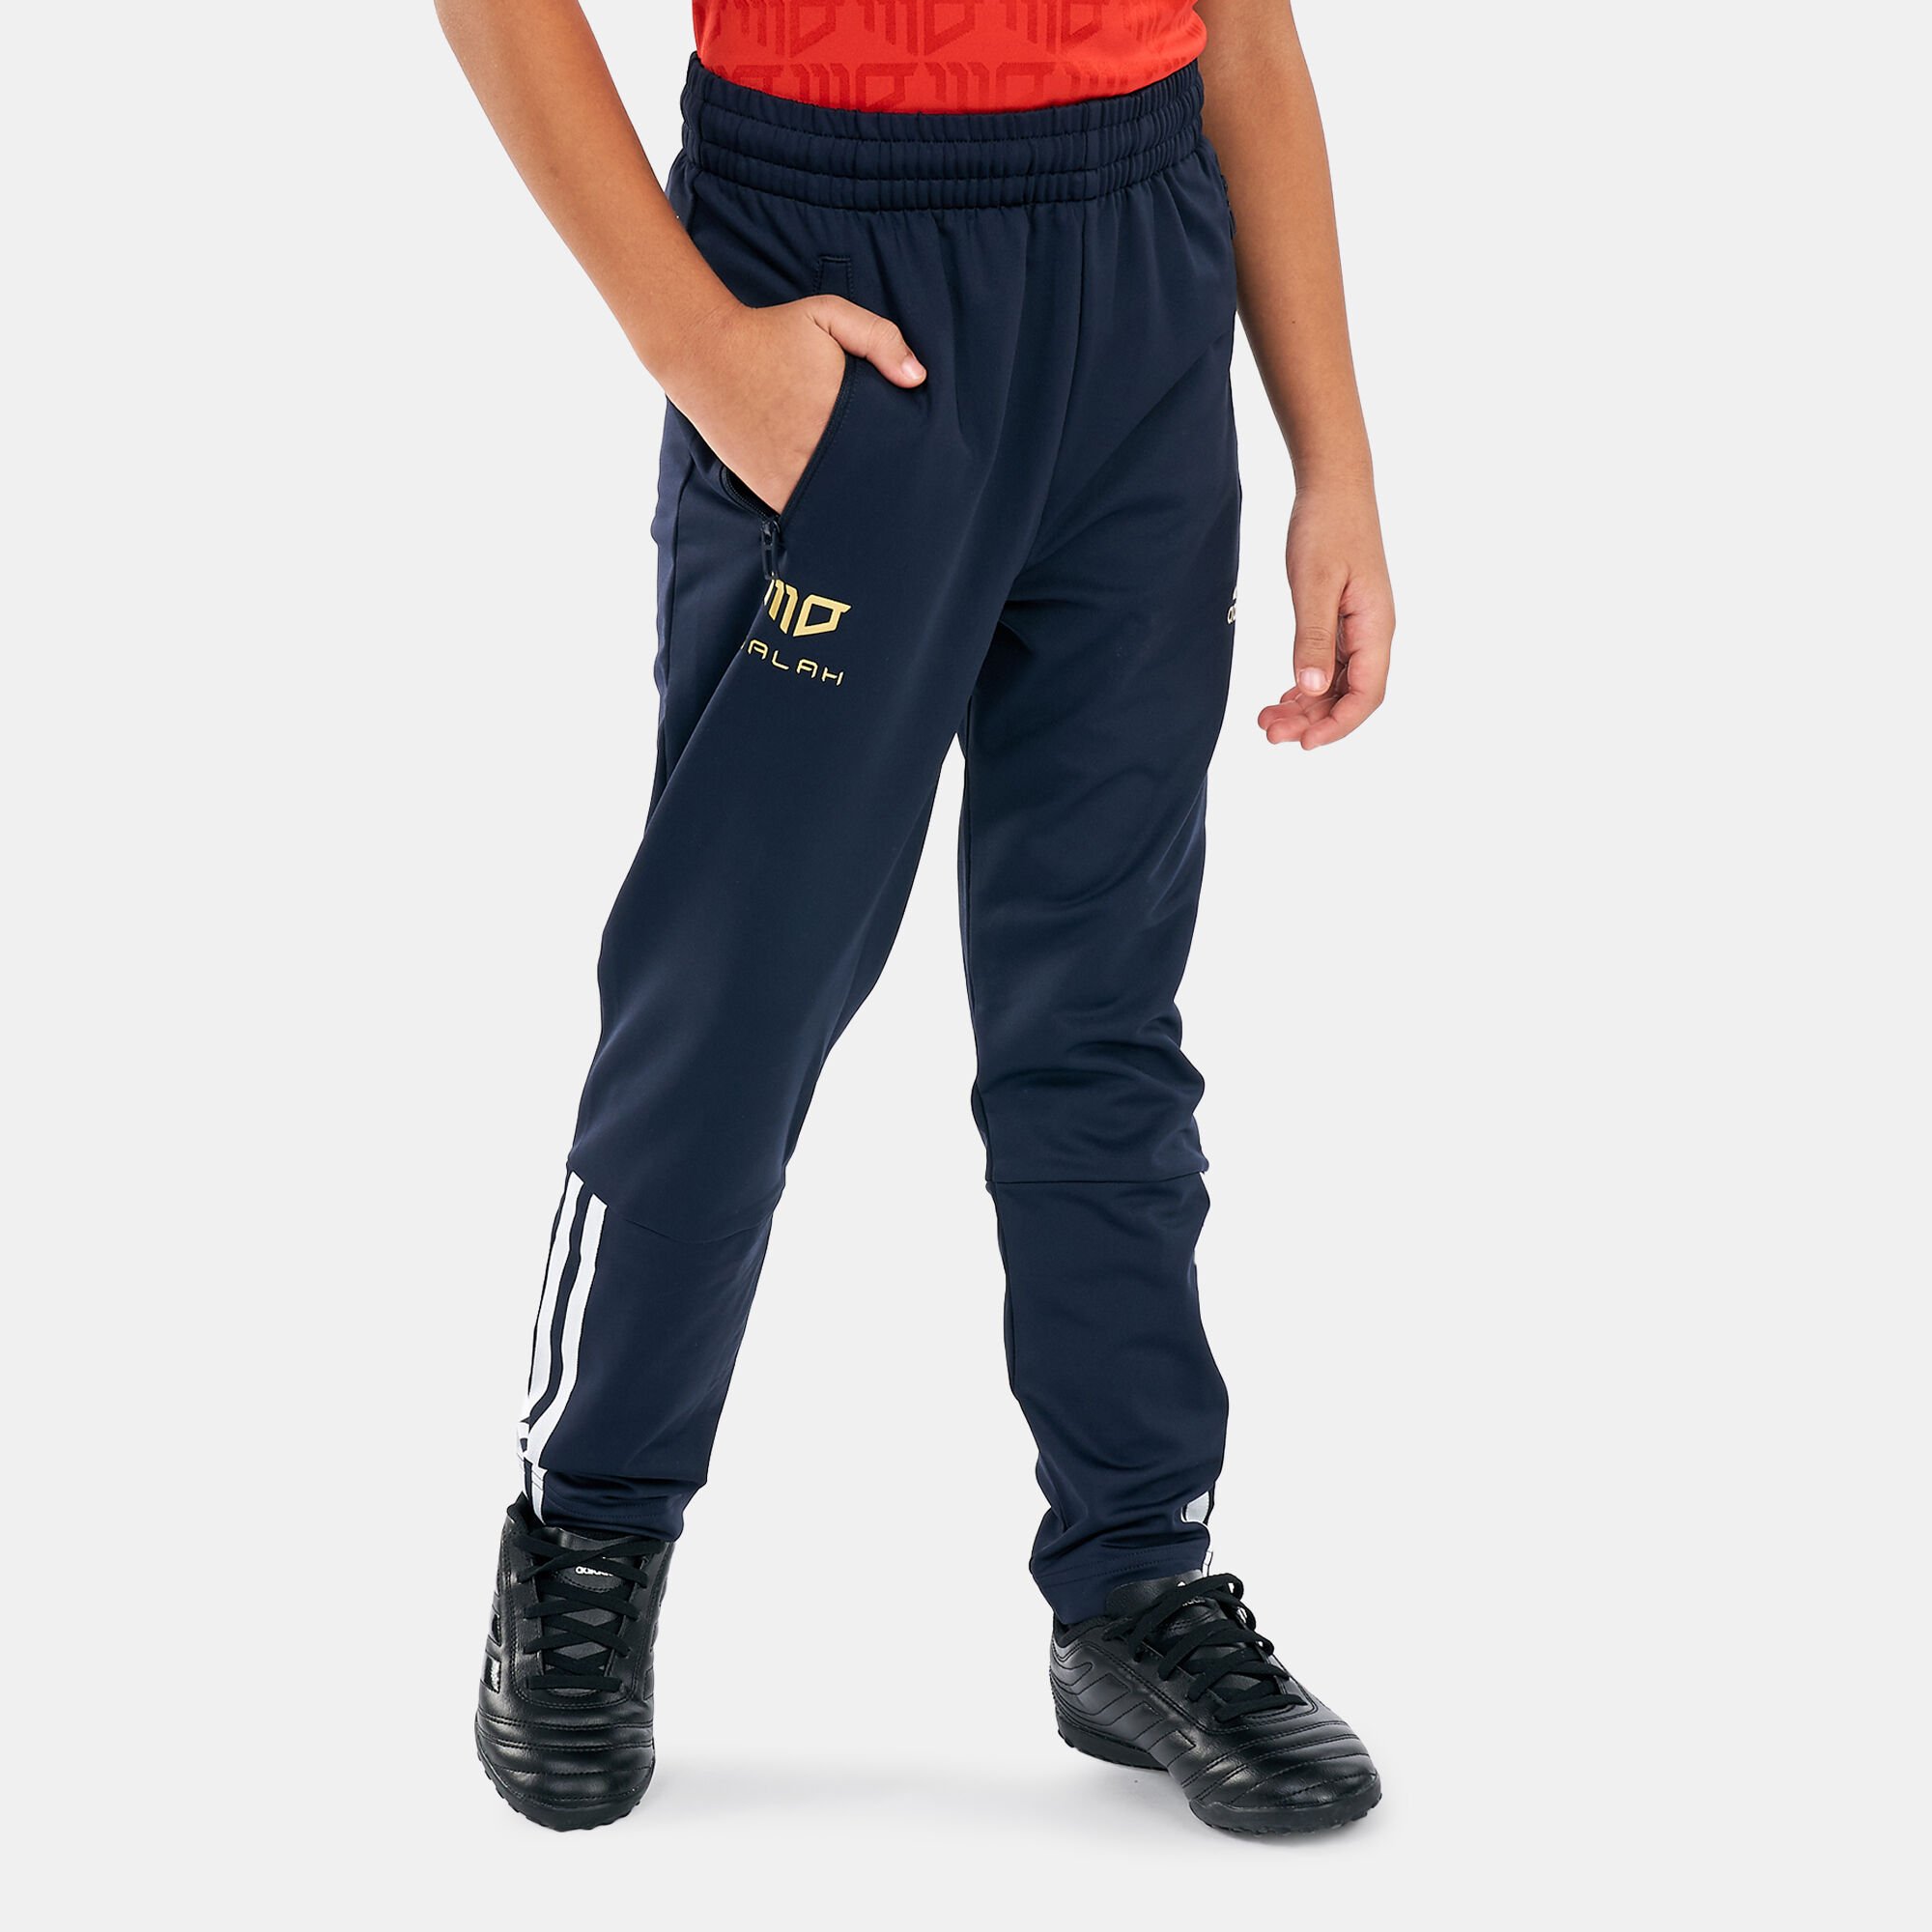 Pants adidas core 18 kids - Top4Football.com